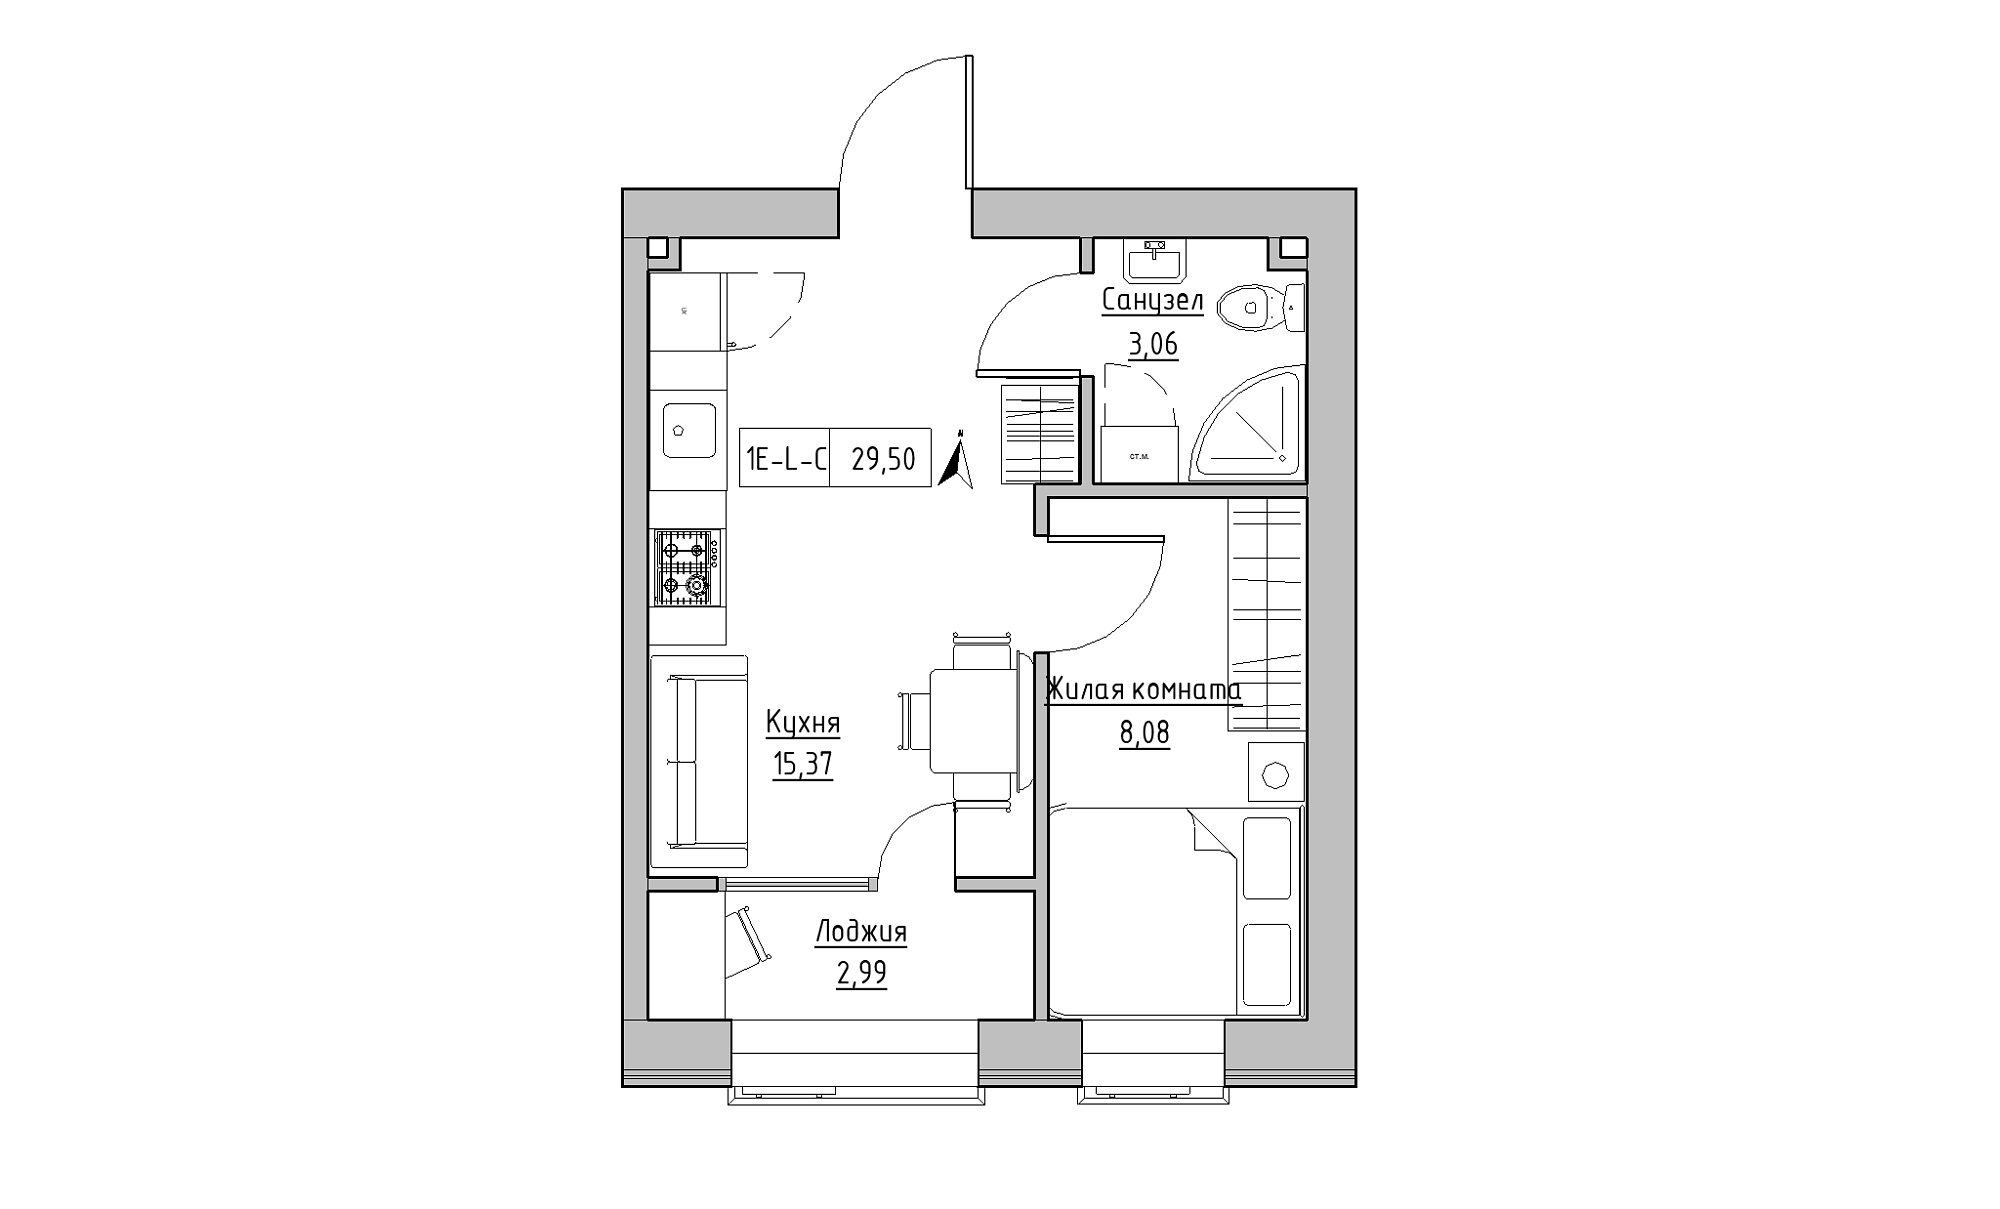 Planning 1-rm flats area 29.5m2, KS-016-04/0006.